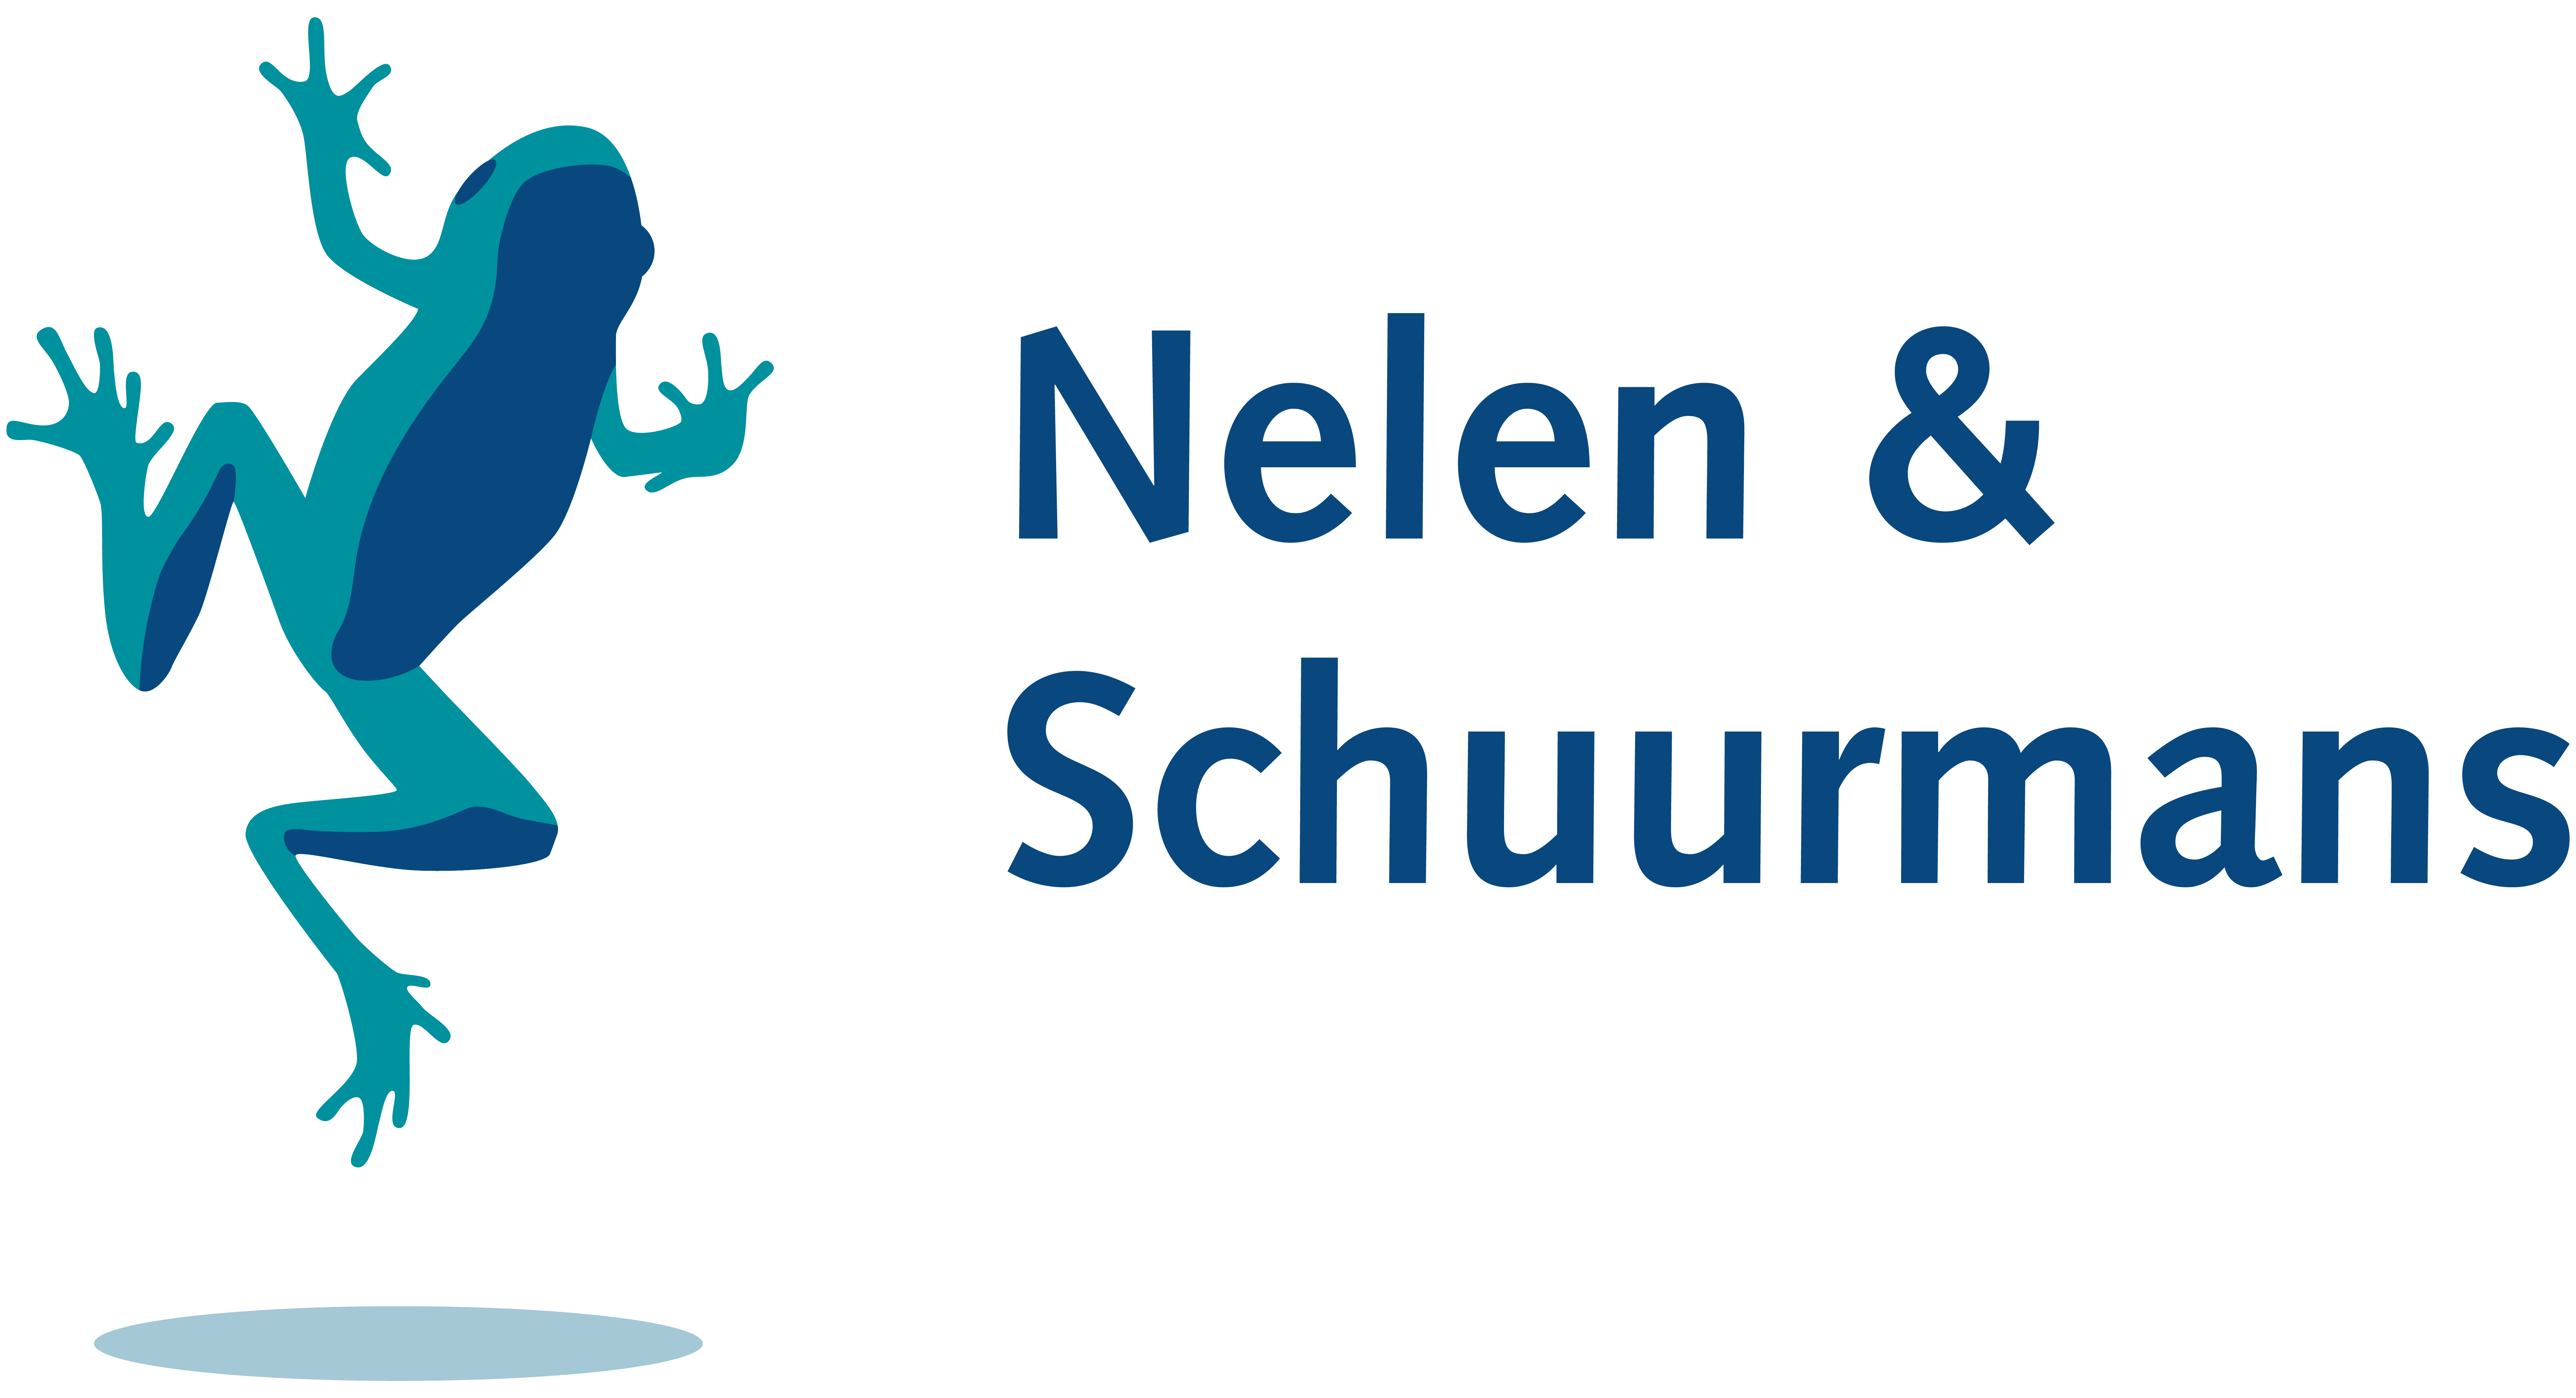 Nelen & Schuurmans logo